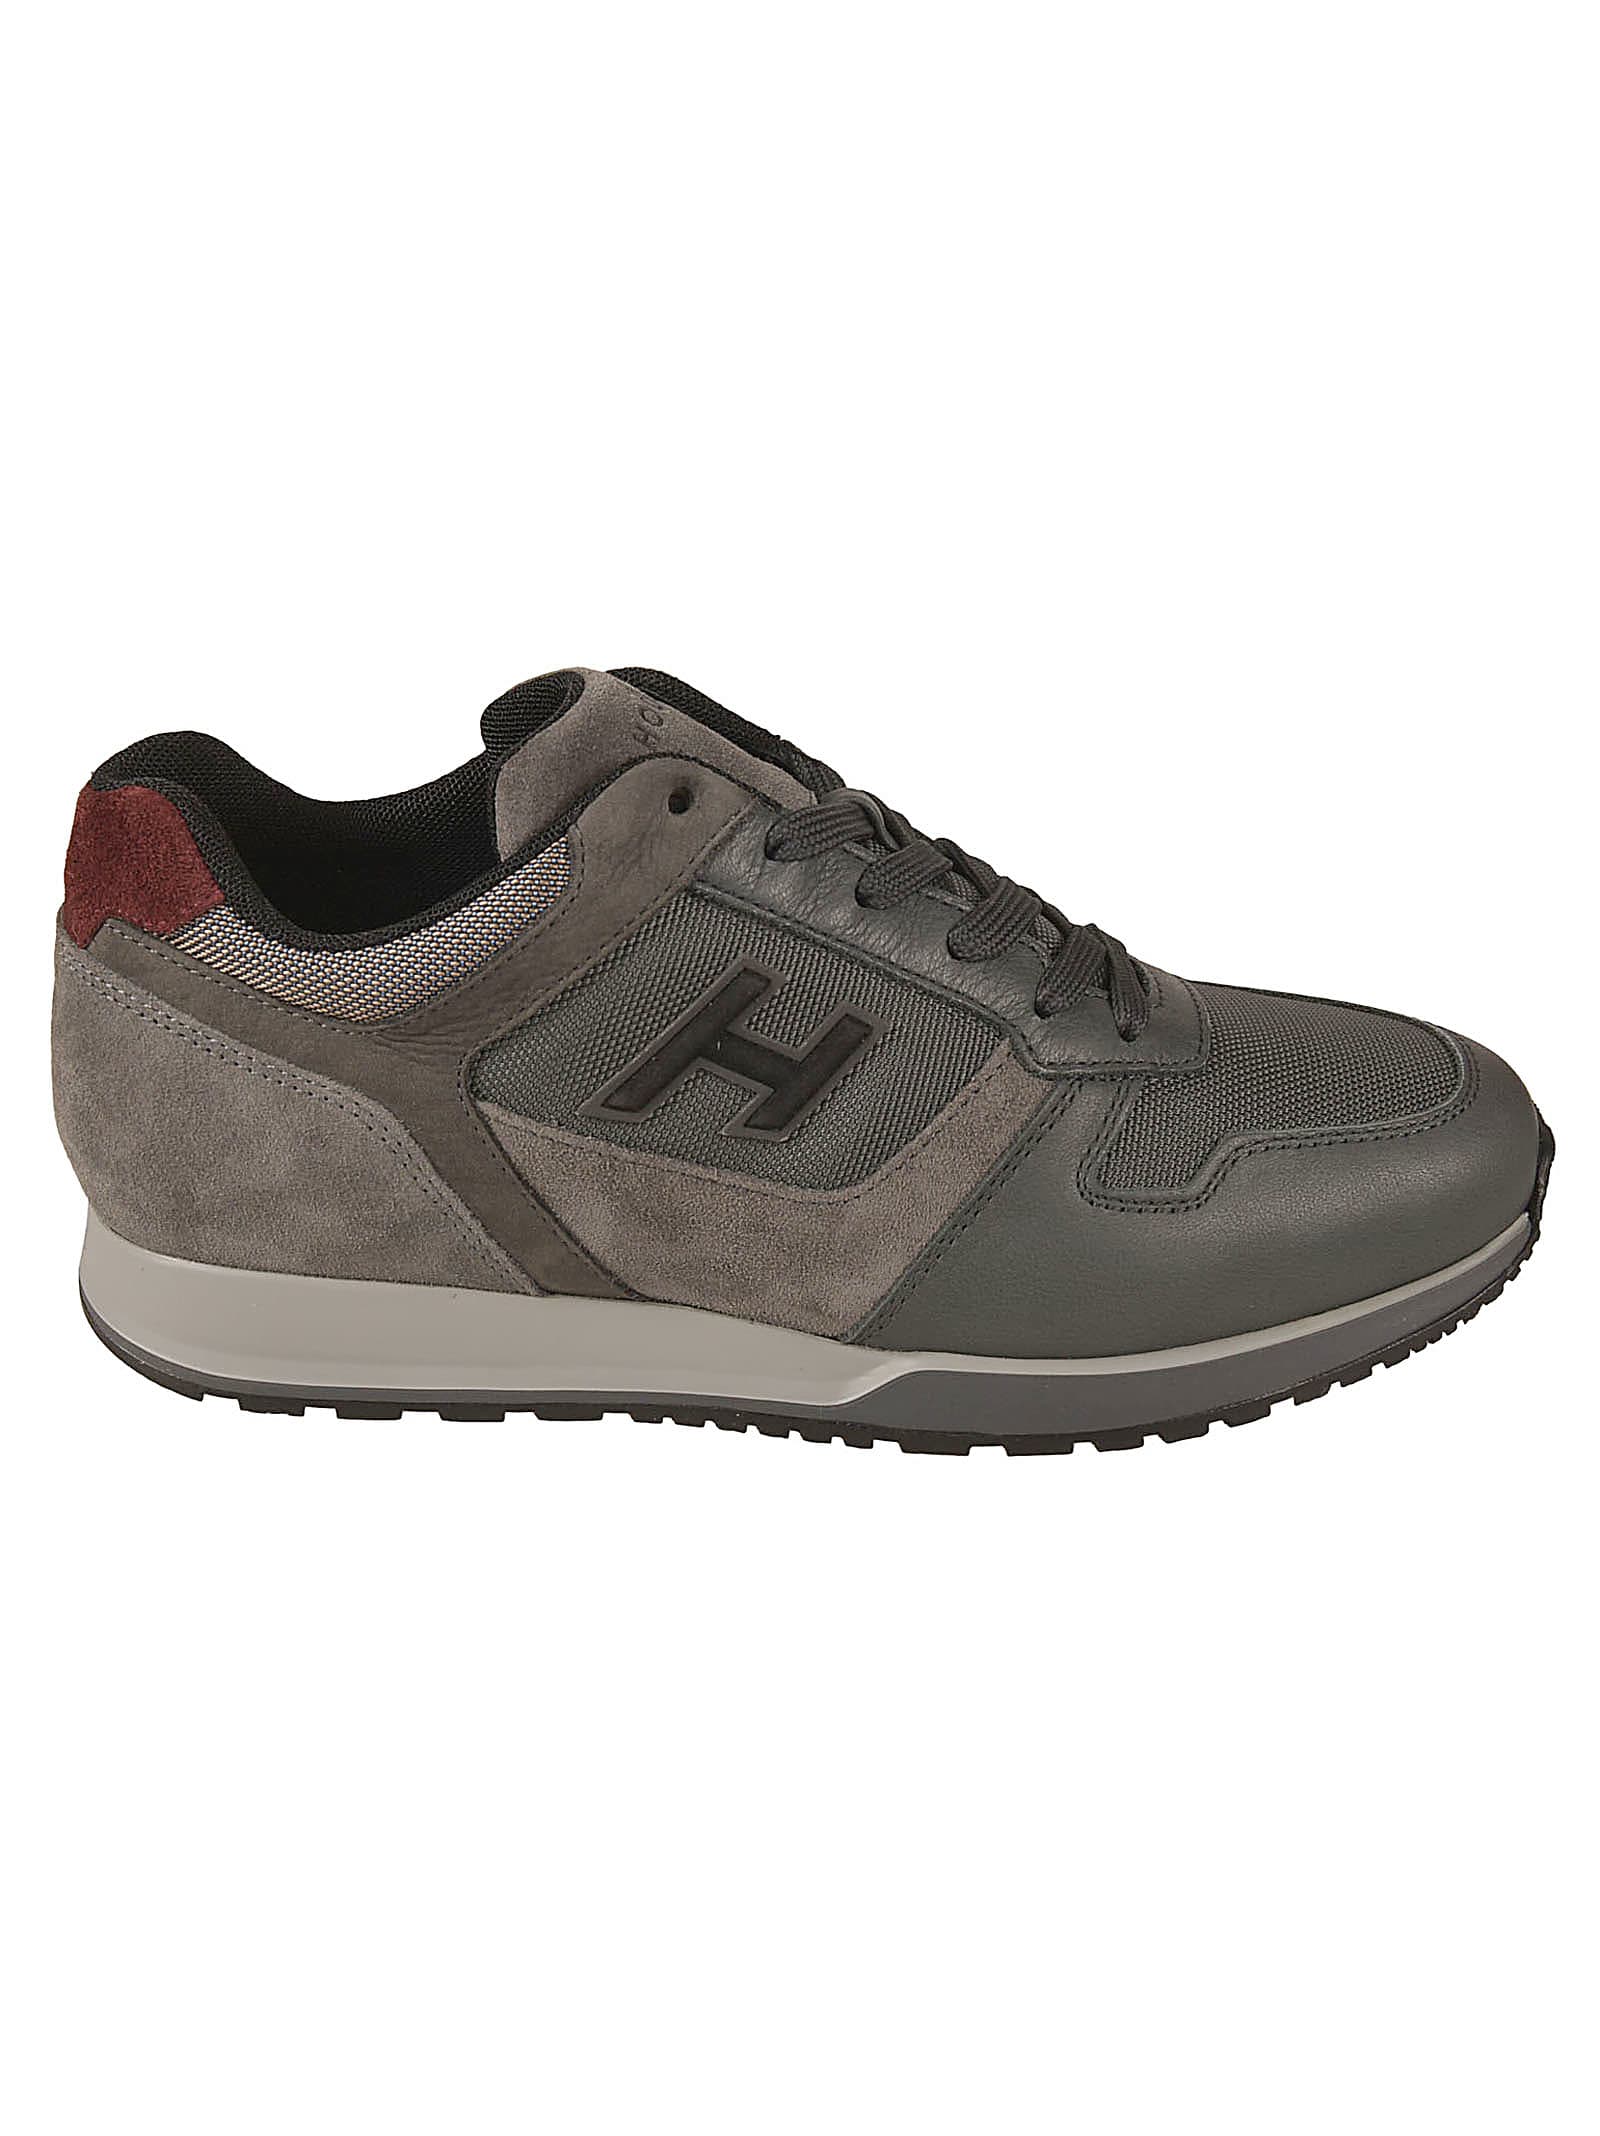 Hogan H321 H Flock Sneakers